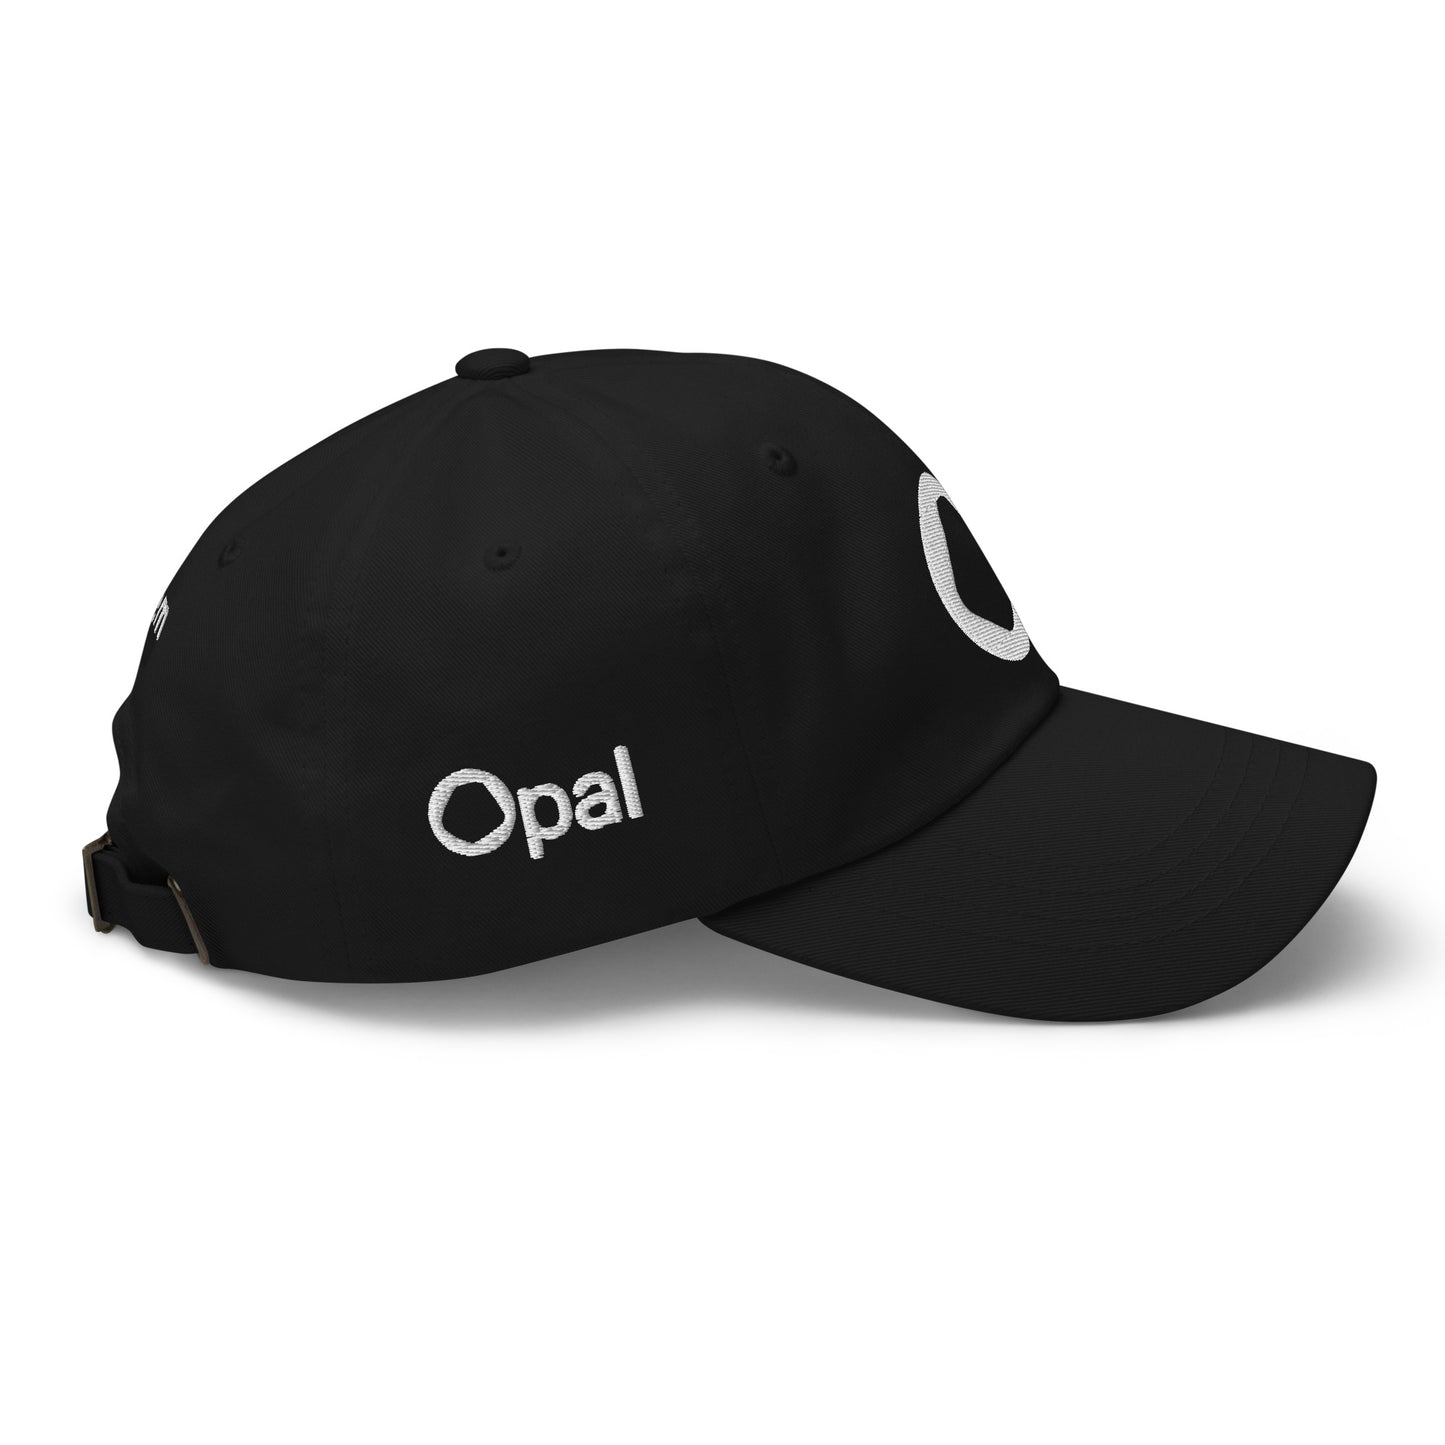 Opal Gem Official Hat